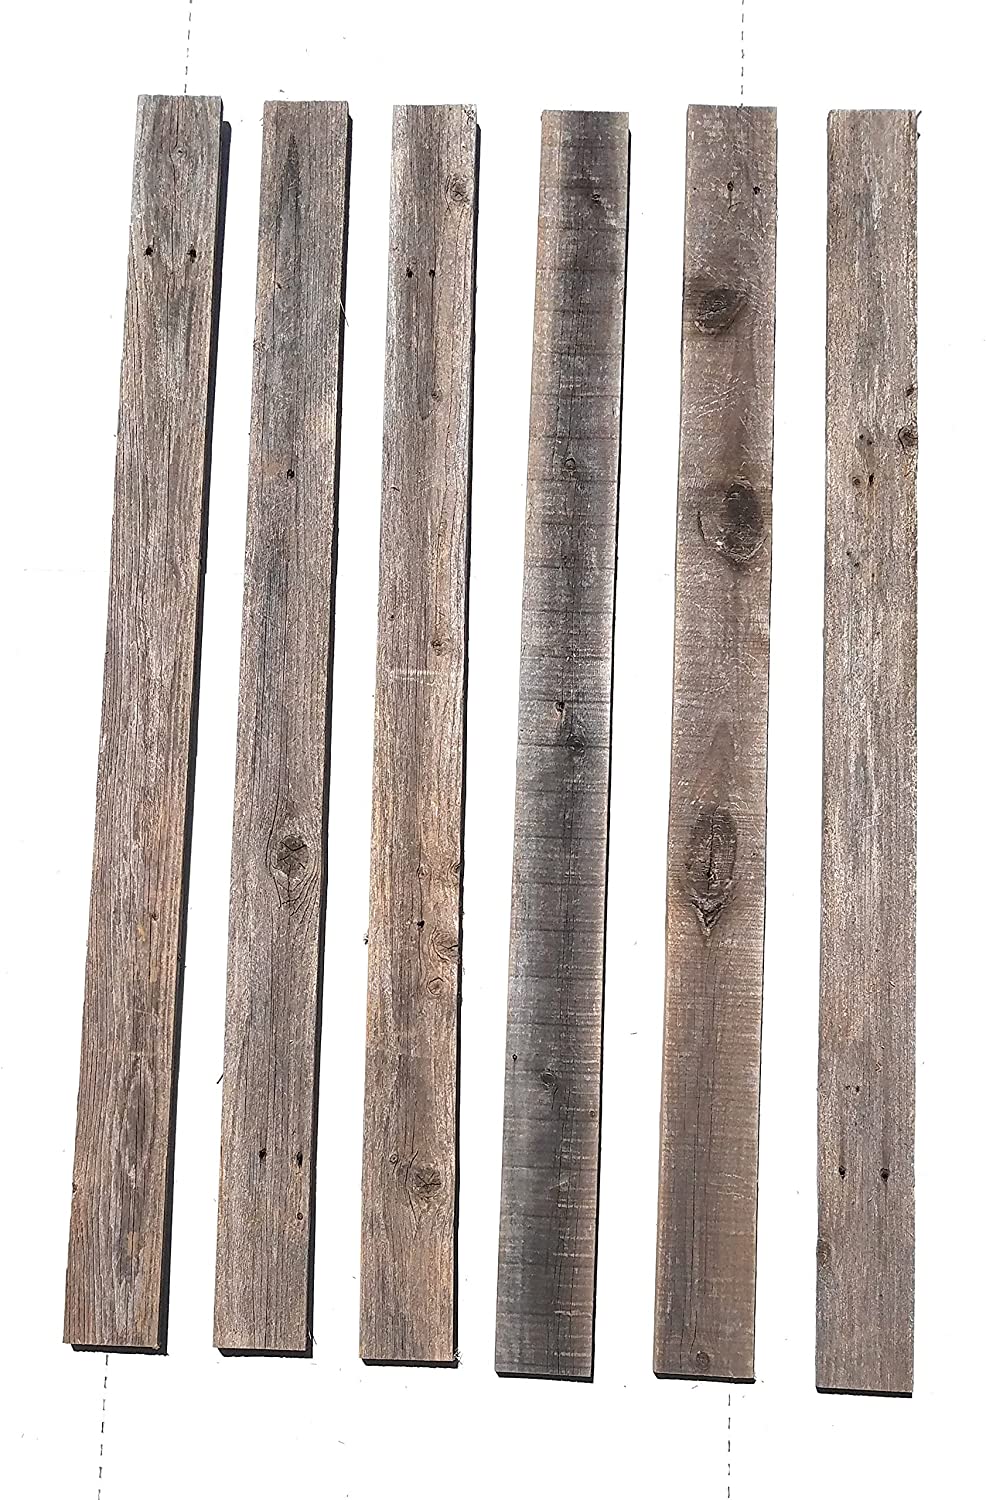 Rockin’ Wood Reclaimed Barn Wood Wall Paneling